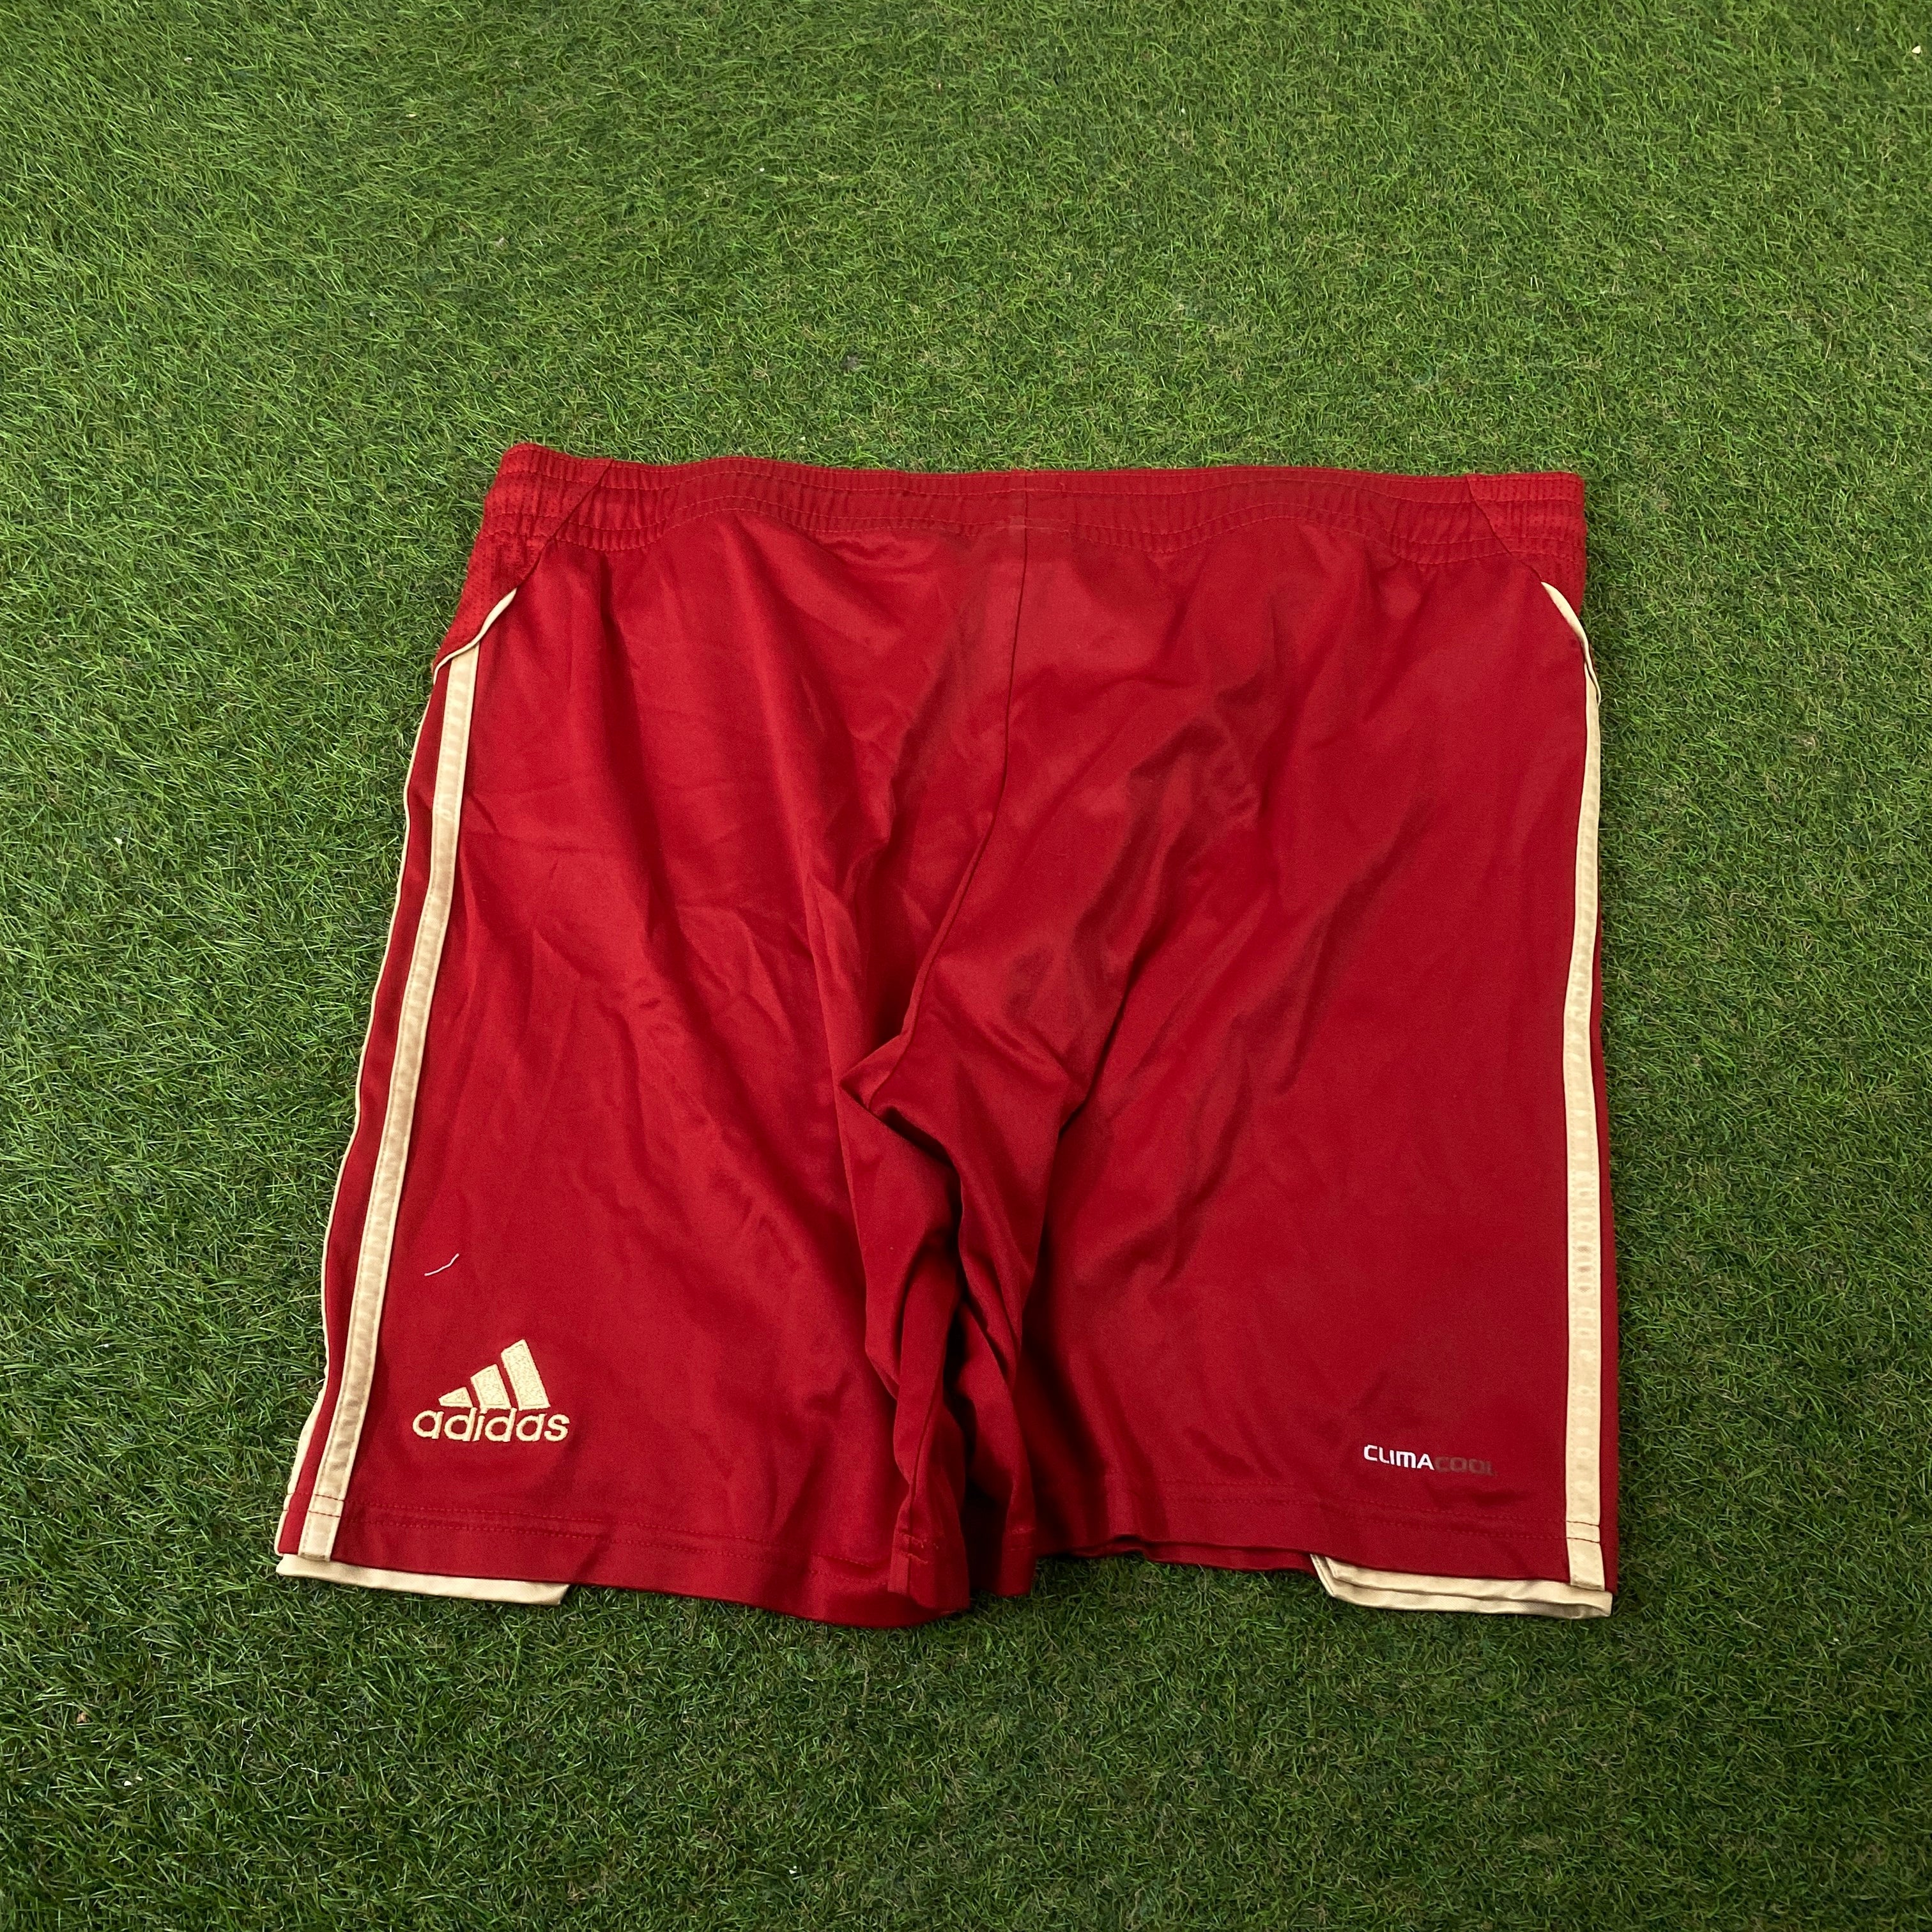 90s Adidas Bayern Munich Football Shorts Red Medium